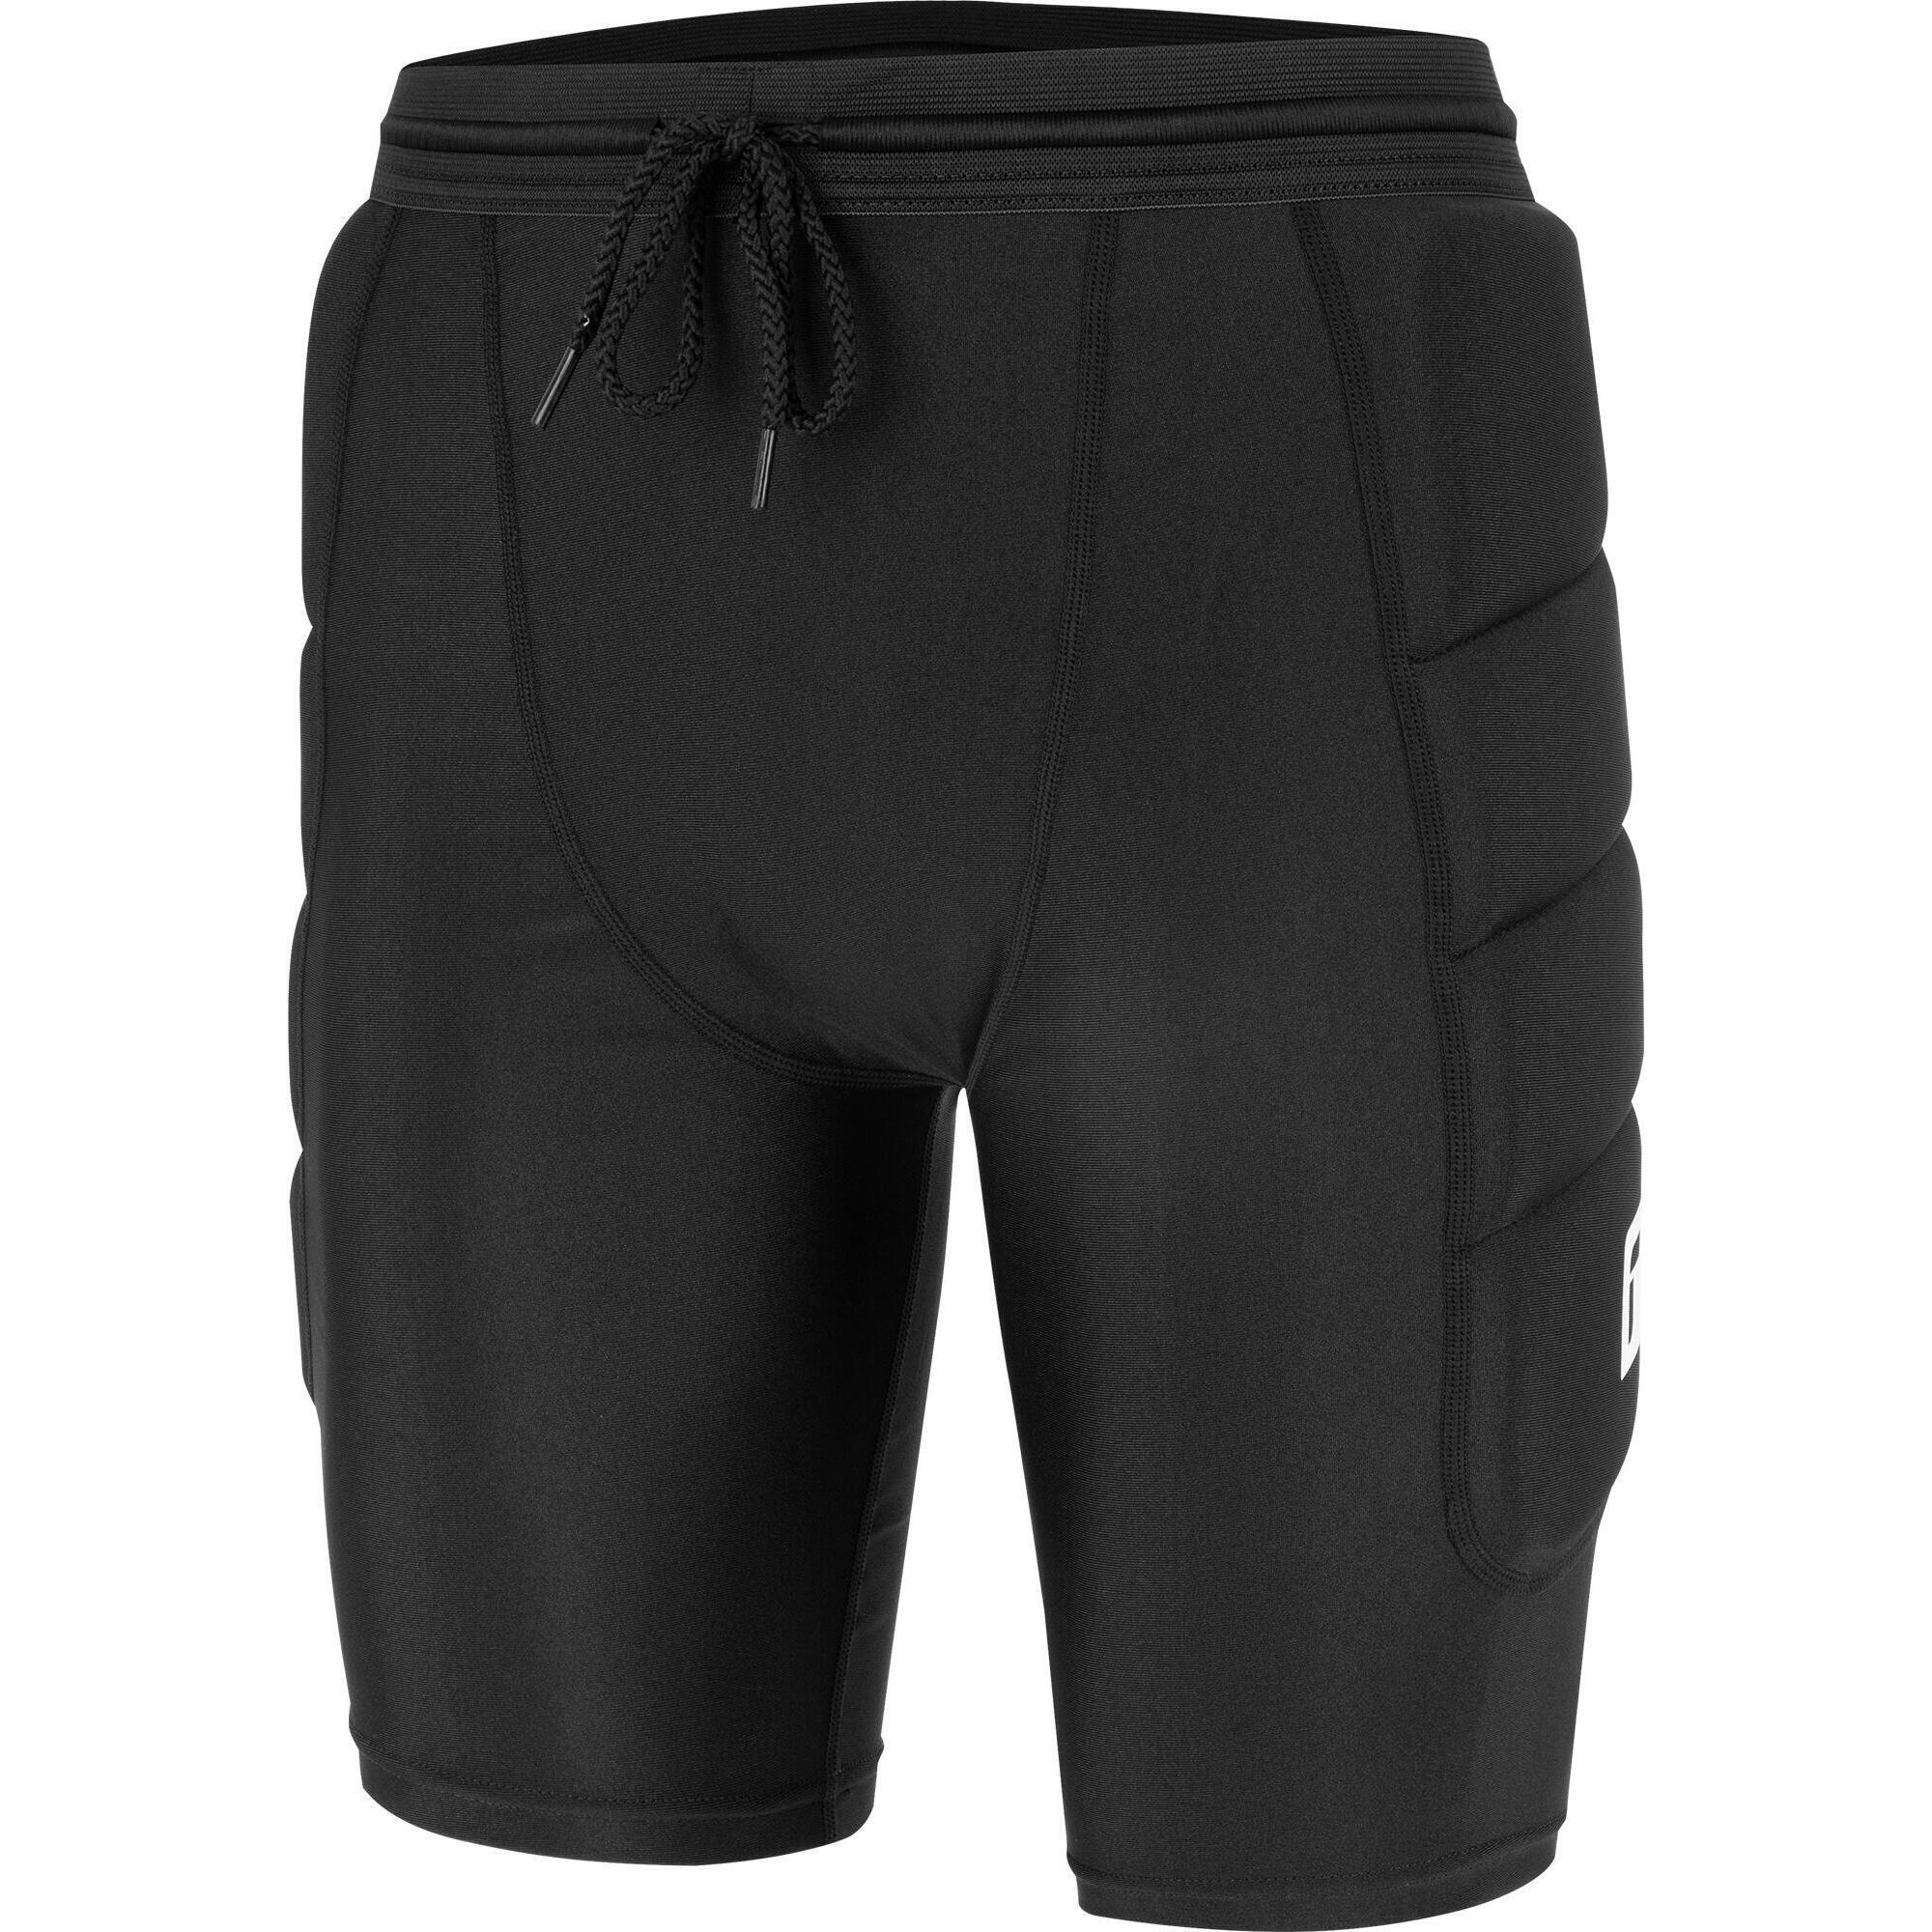 Reusch Goalkeeper Pants Compression Short Soft Padded, черный цена и фото